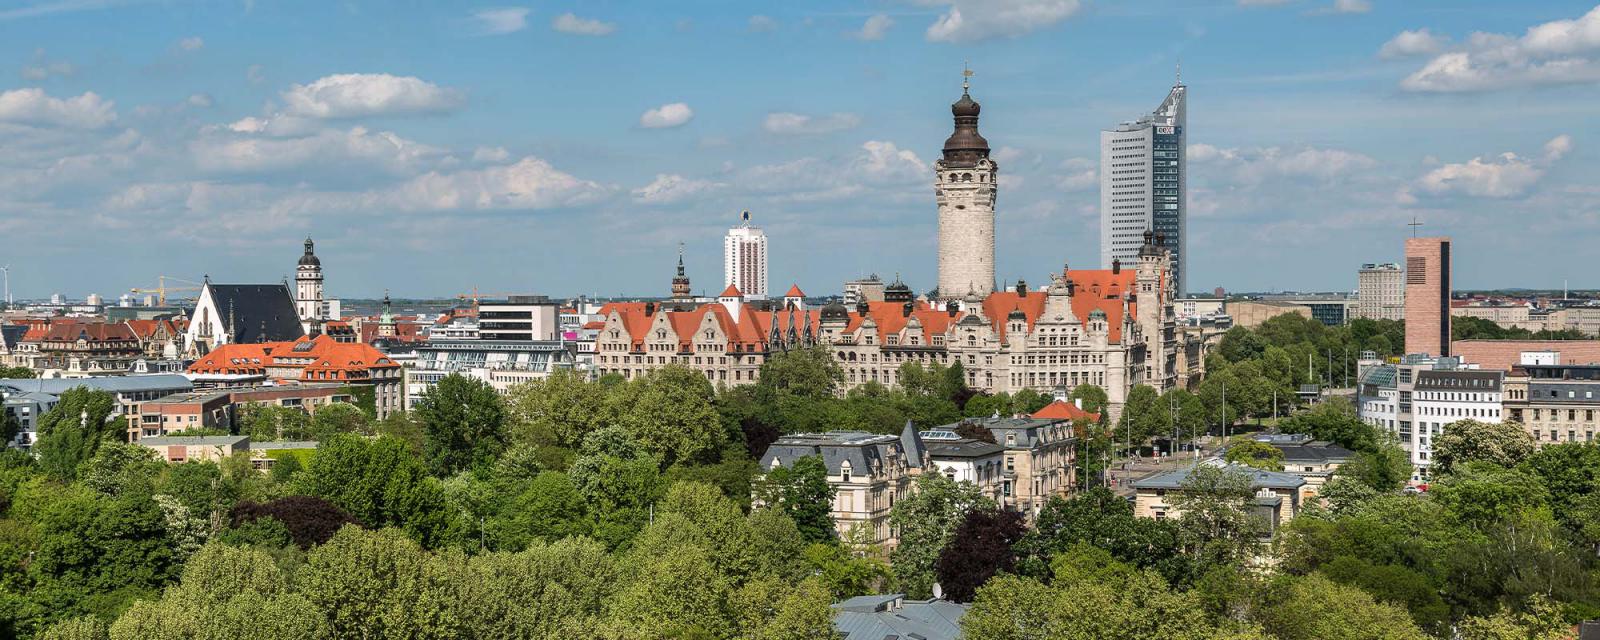 Leipzig: the city of music 